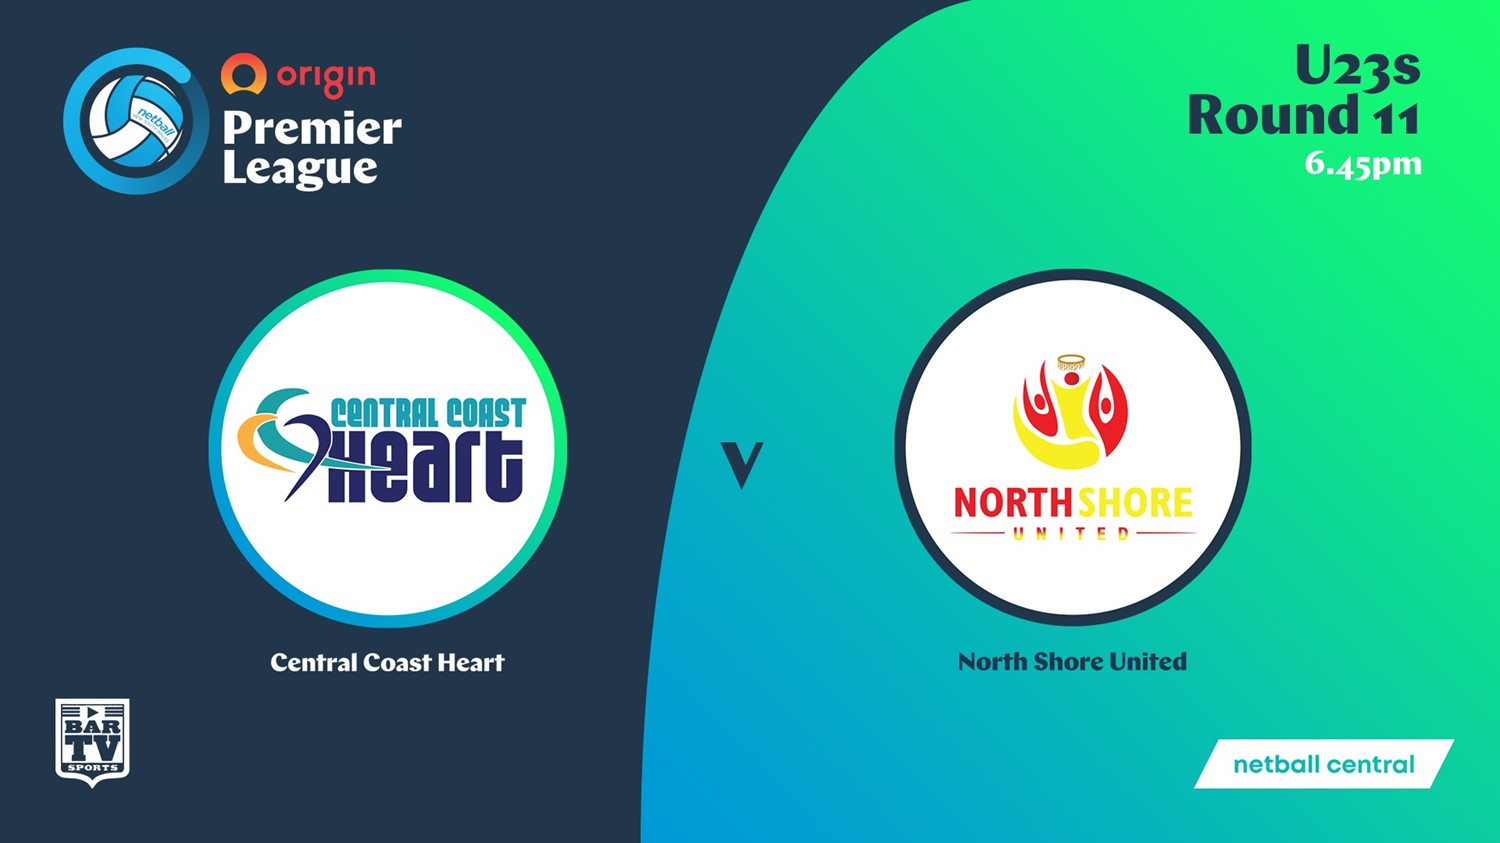 NSW Prem League Round 11 - U23s - Central Coast Heart v North Shore United Minigame Slate Image